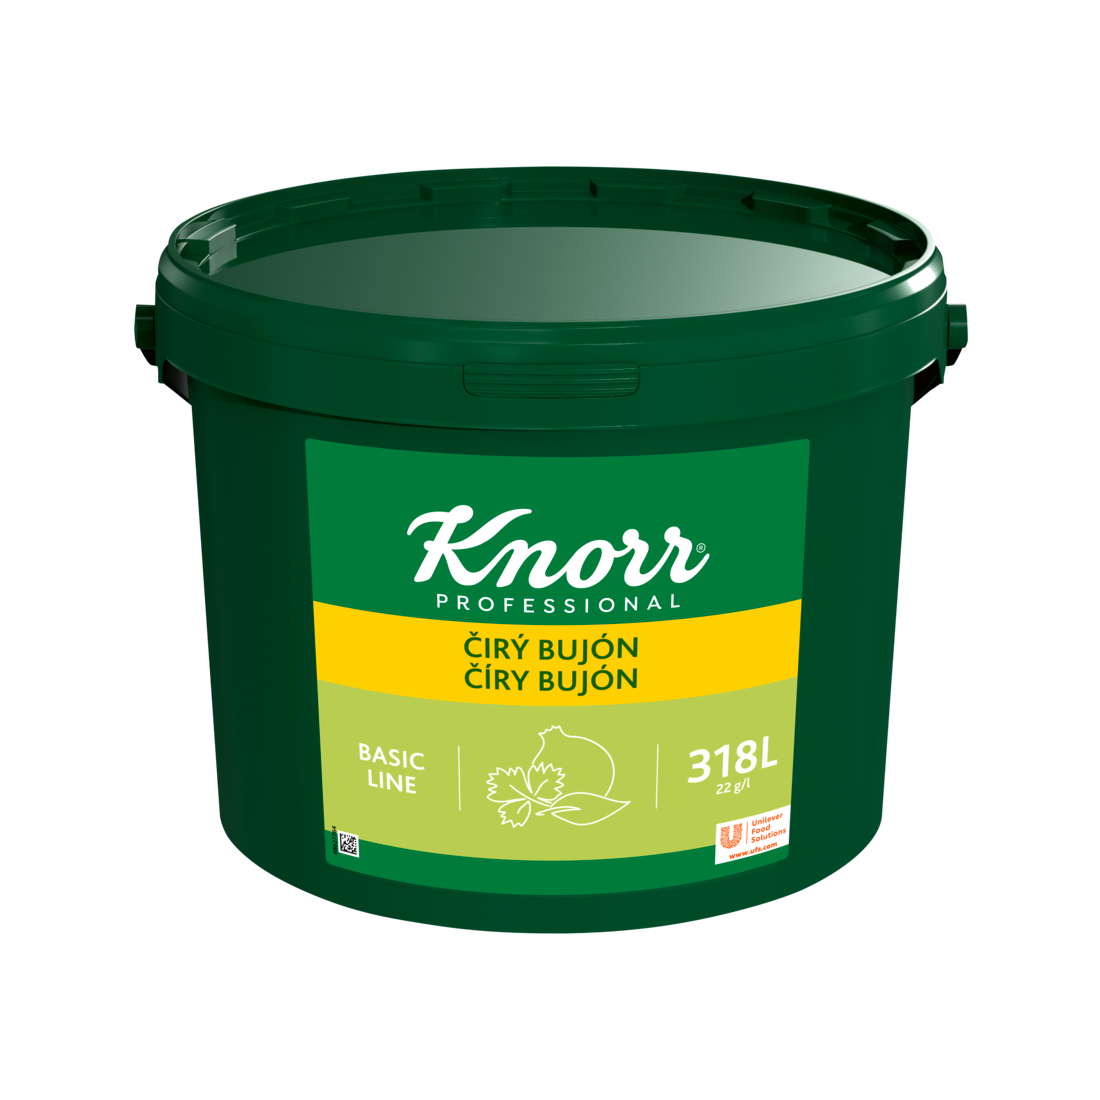 KNORR Professional Číry bujón 7 kg - 